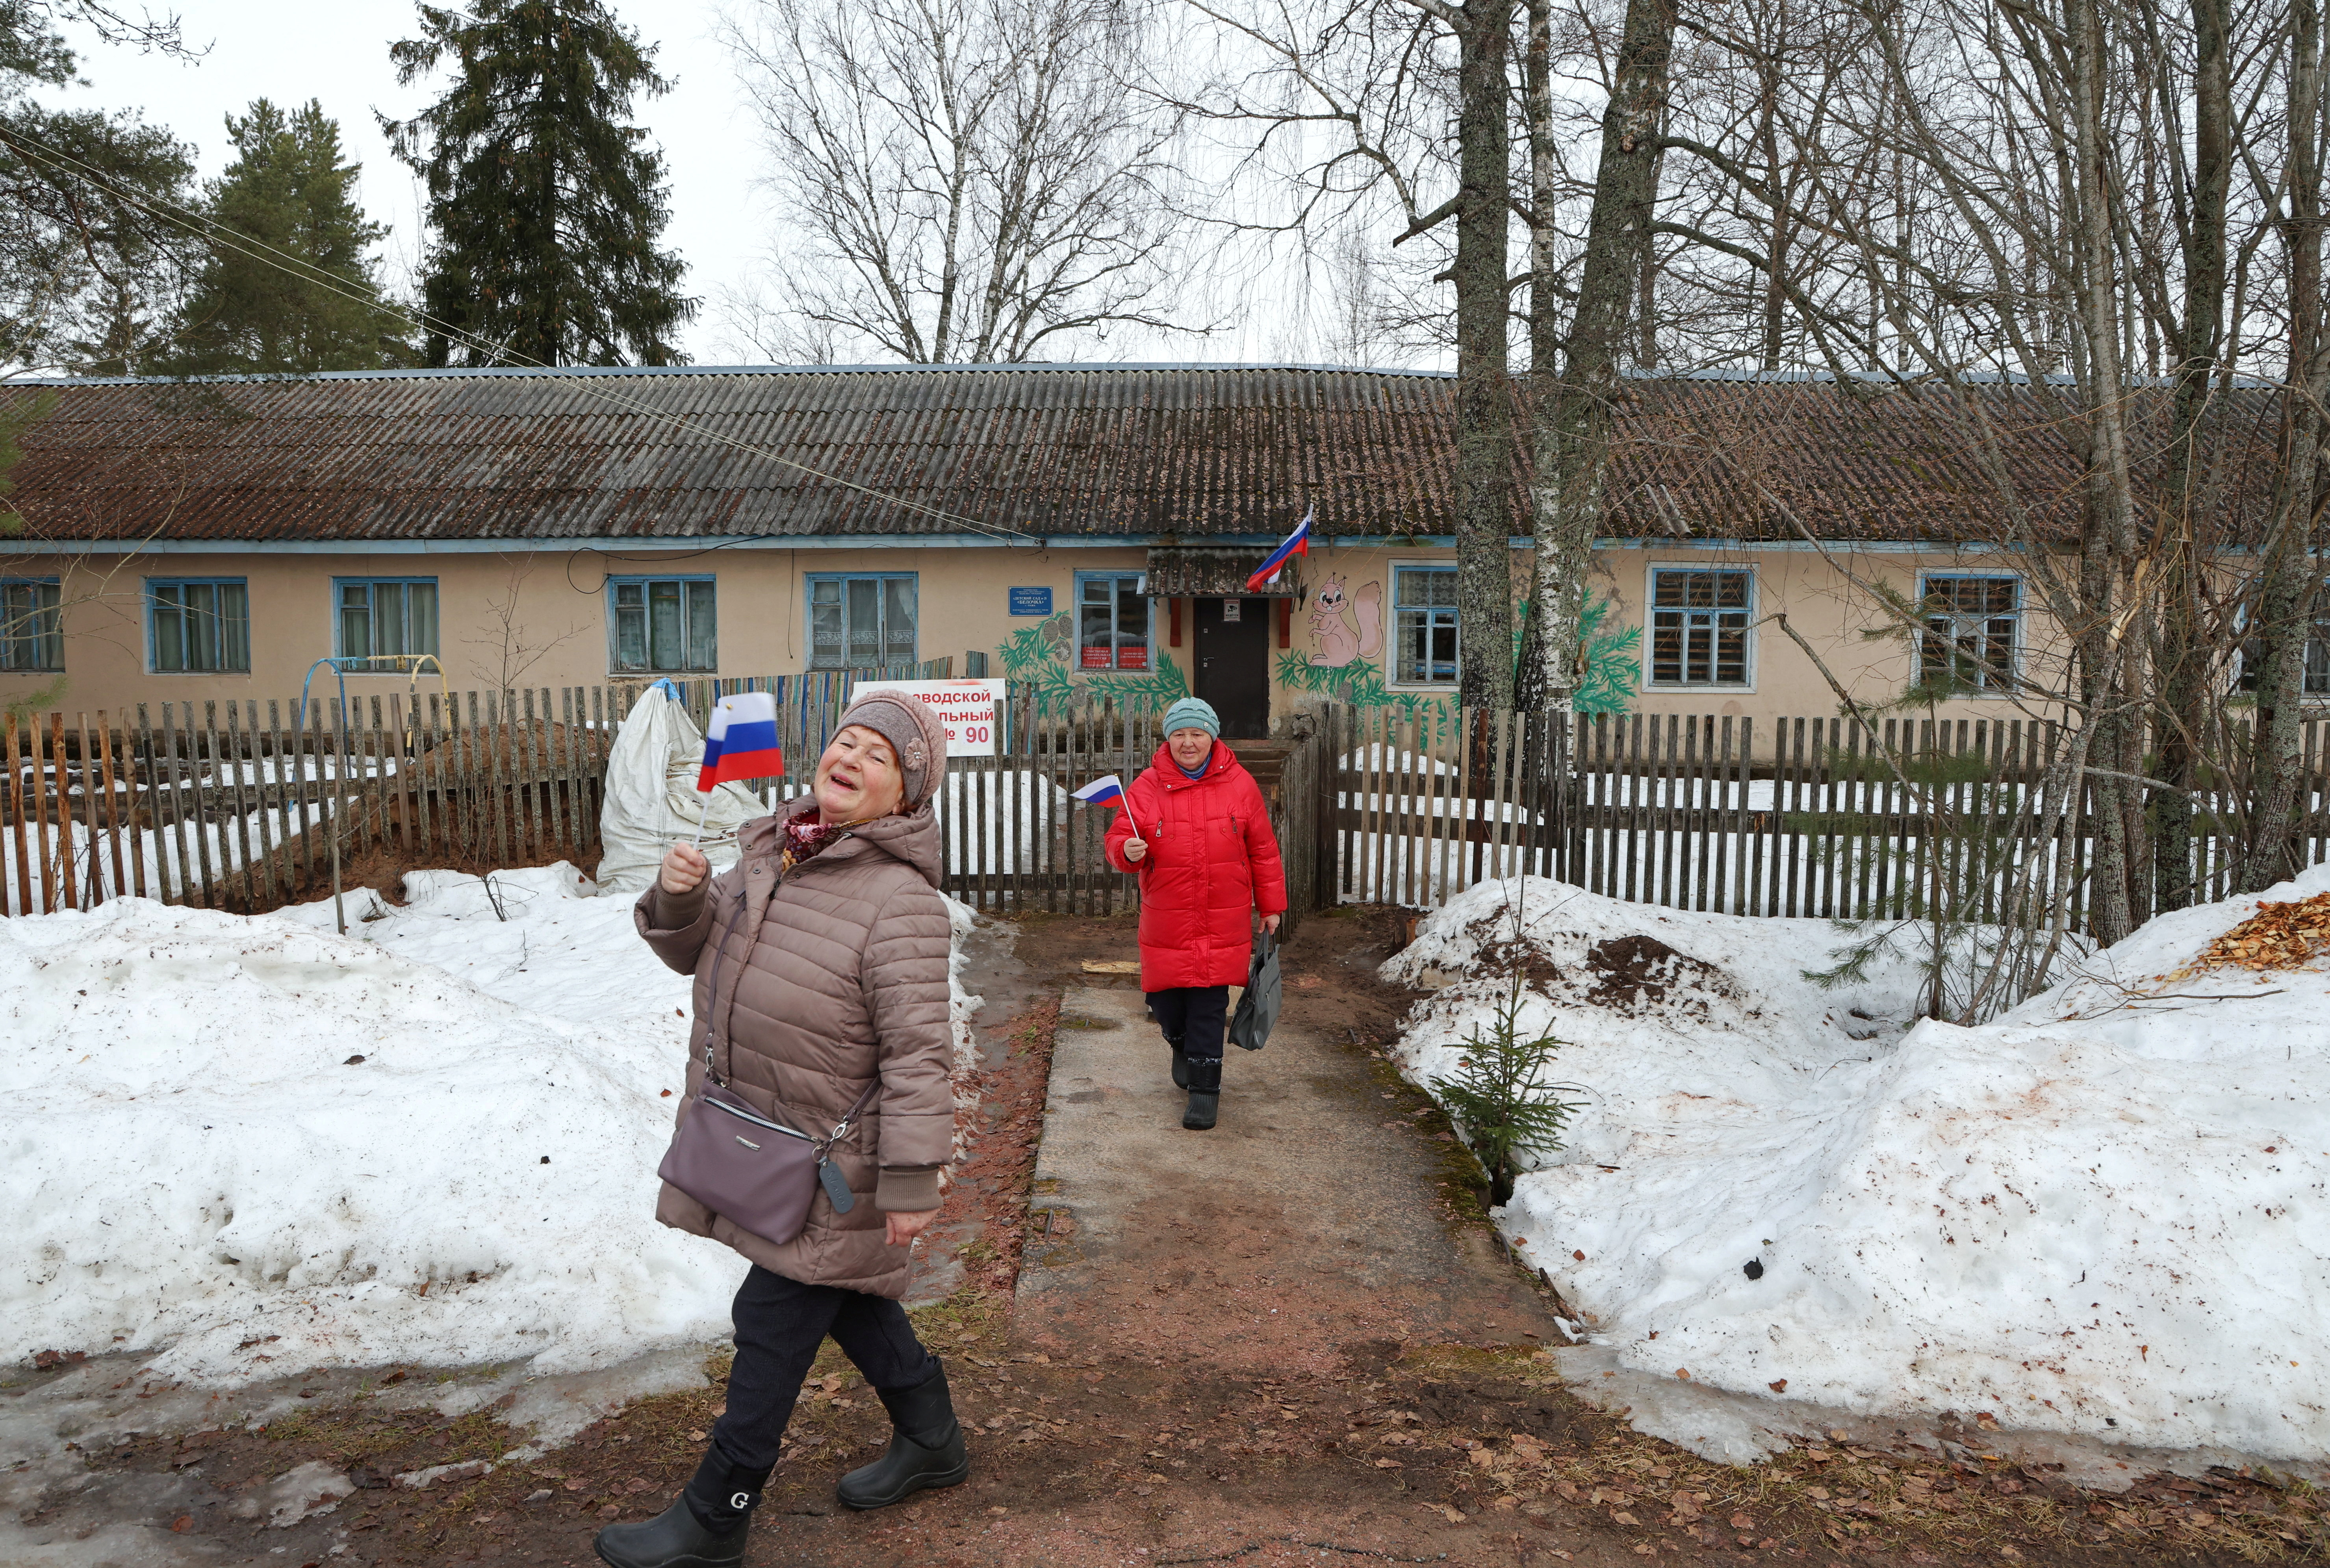 Vote in Russia's presidential election in Leningrad region